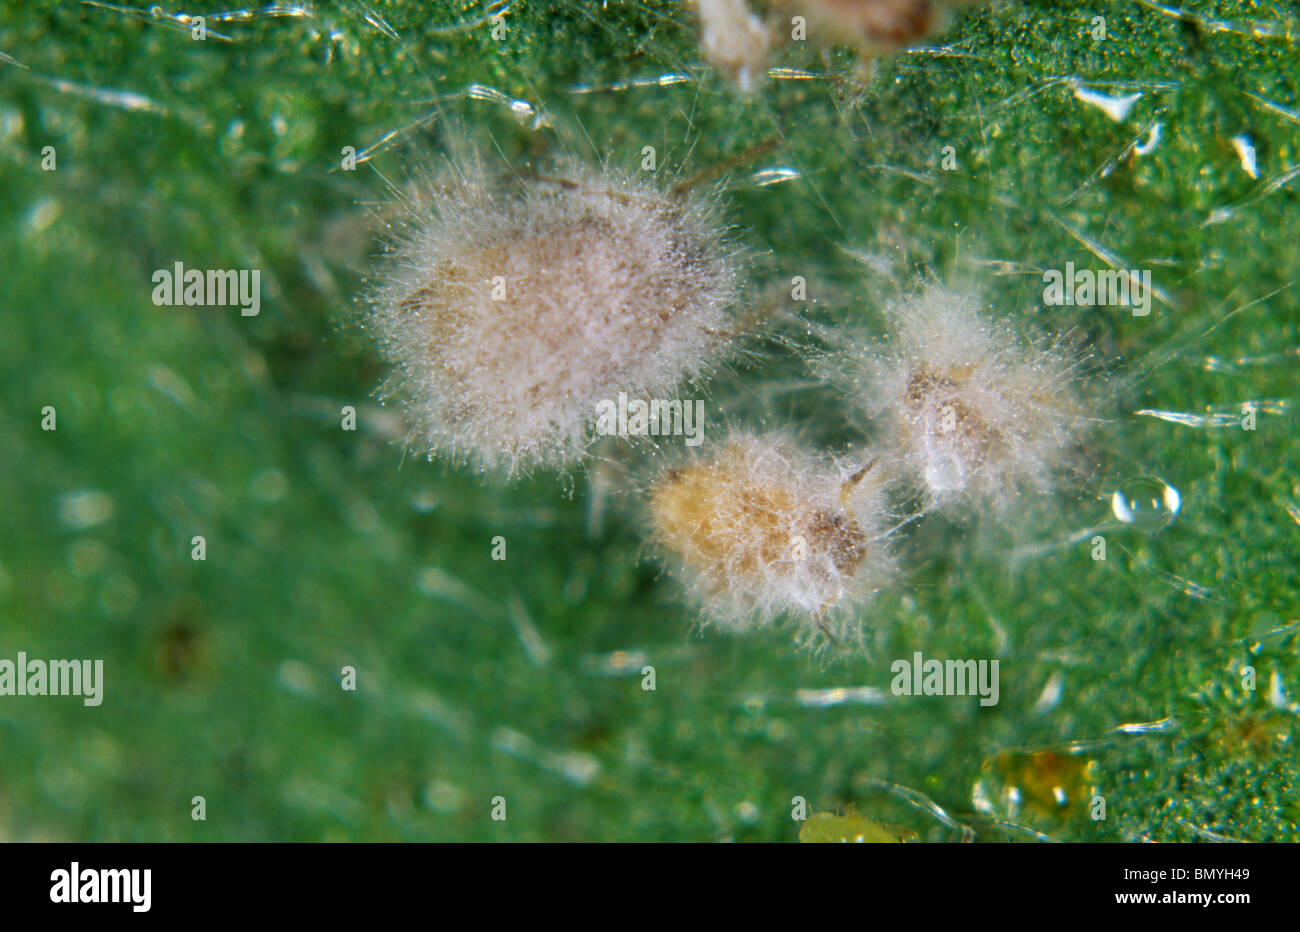 Development of entomopathogenic fungus Verticillium lecanii on aphid host pests - third in series Stock Photo